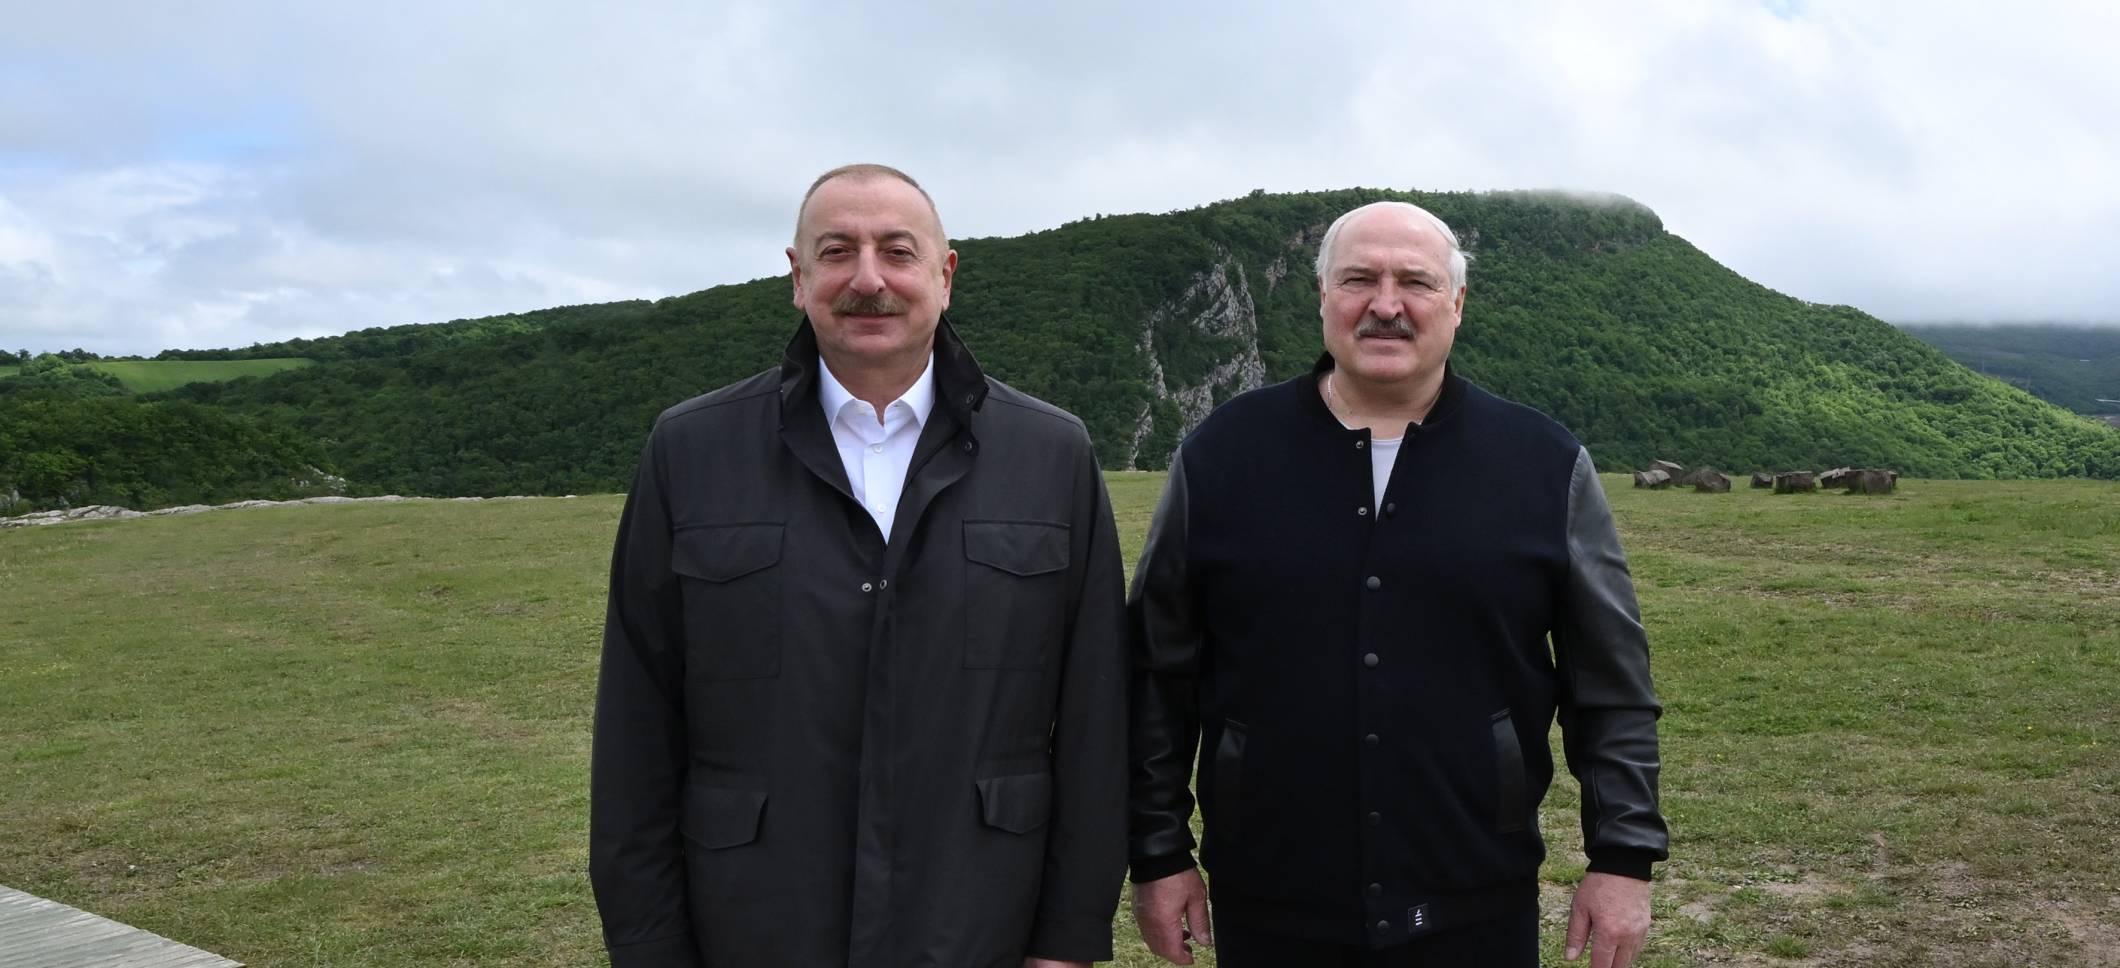 Ilham Aliyev and President Aleksandr Lukashenko visited Jidir Duzu plain